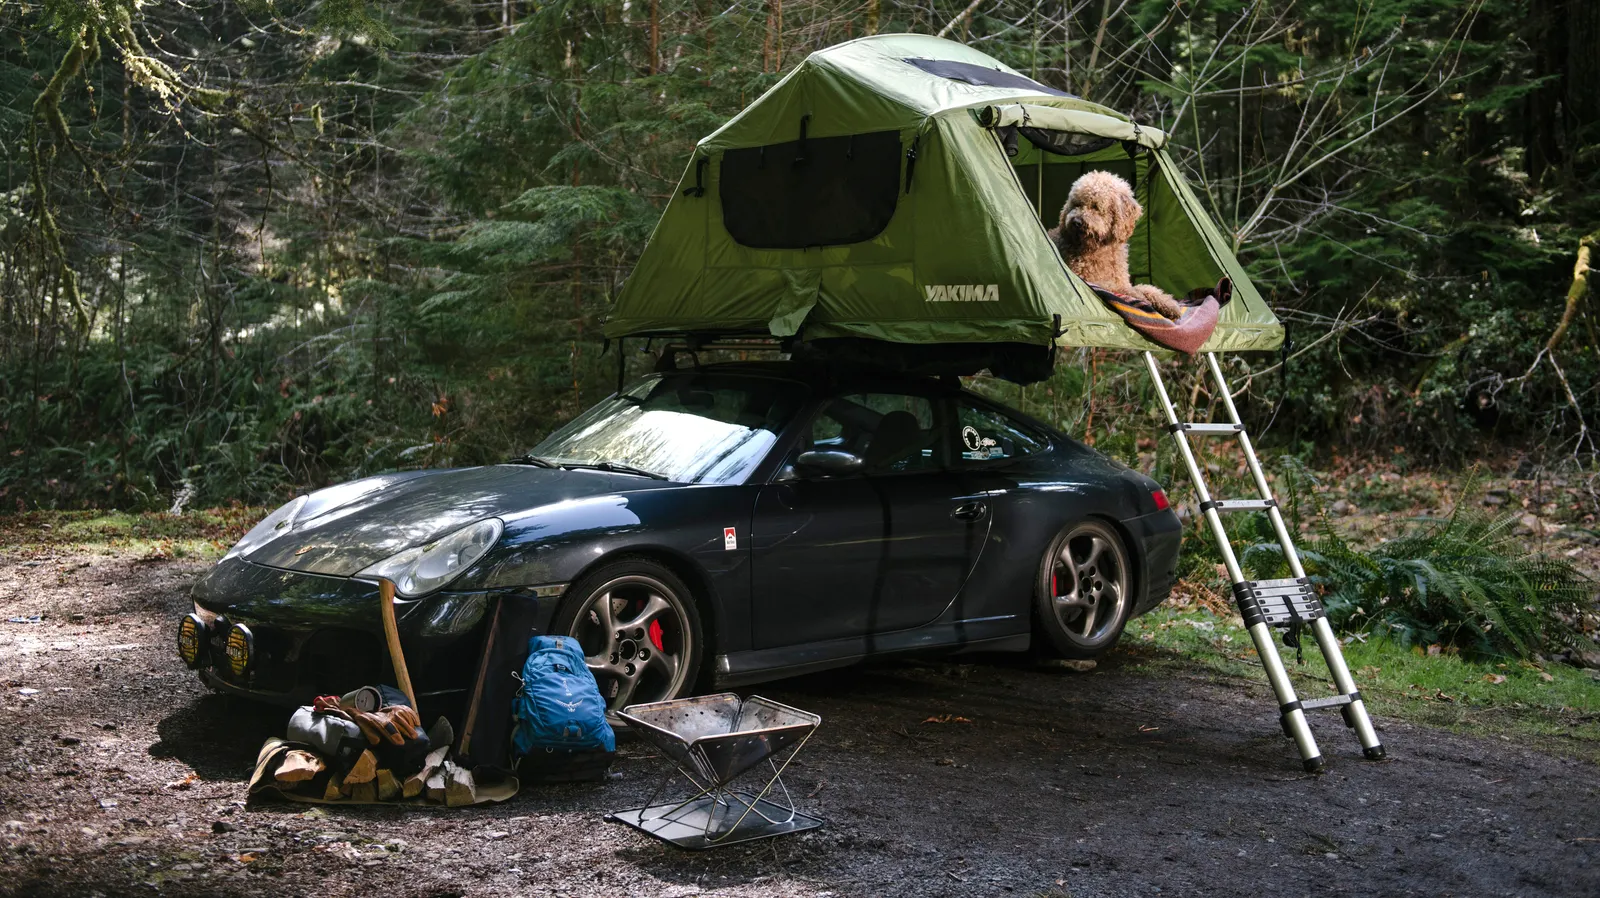 POREST: Porter, Now a Camping Car. But How?